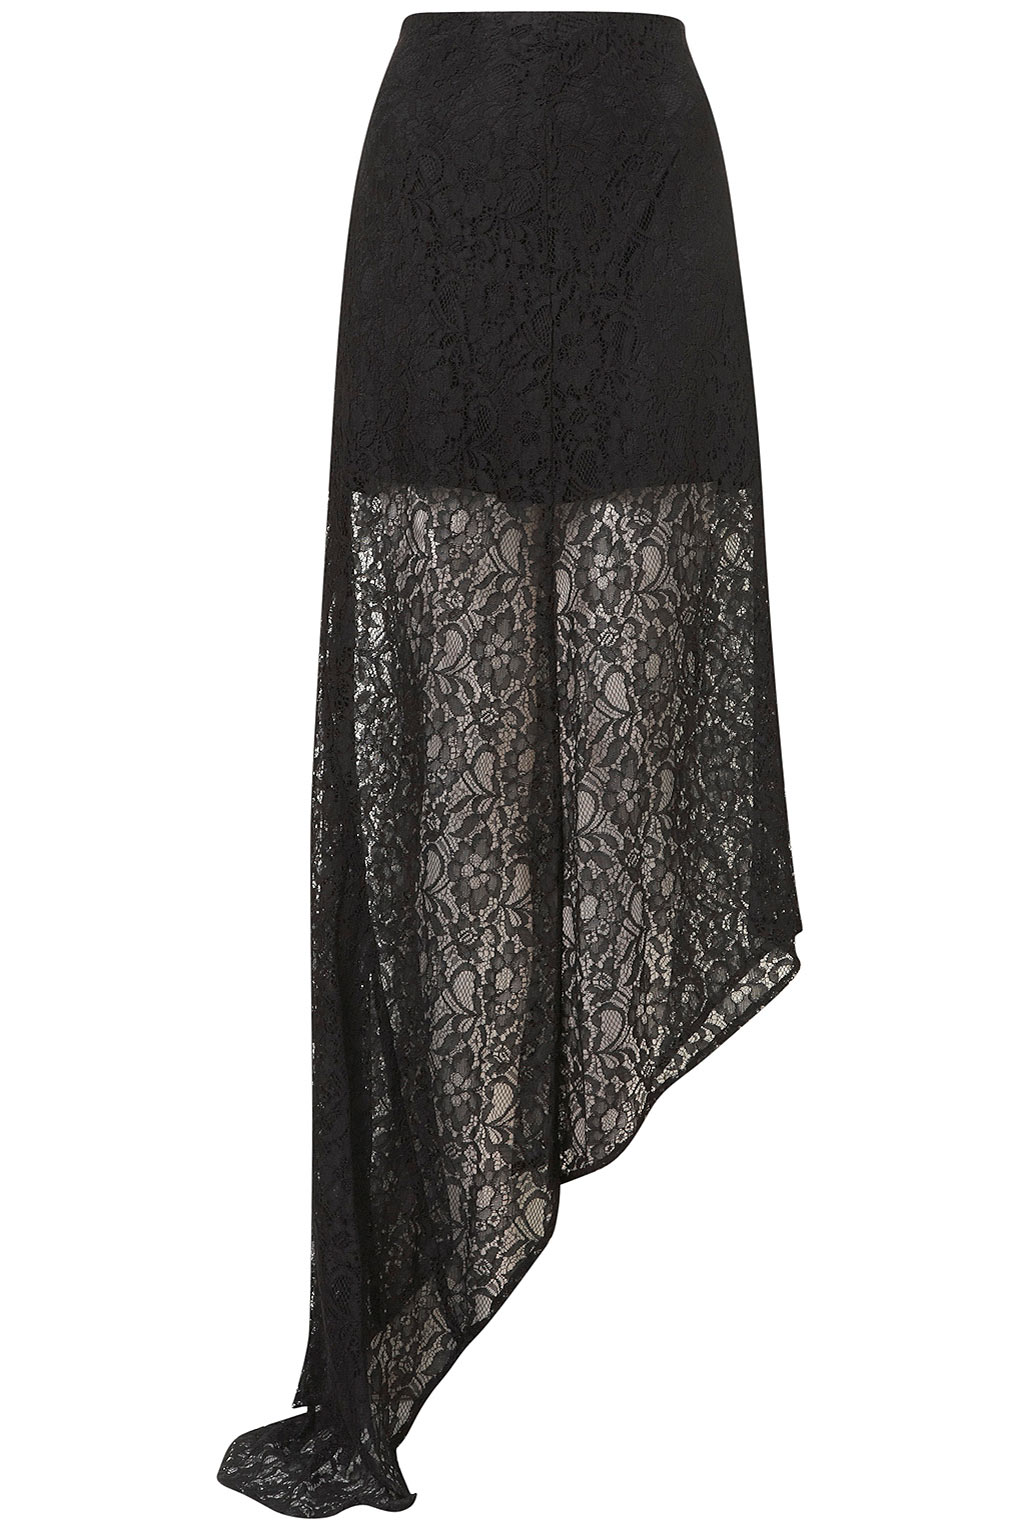 Topshop Premium Lace Fishtail Skirt in Black | Lyst